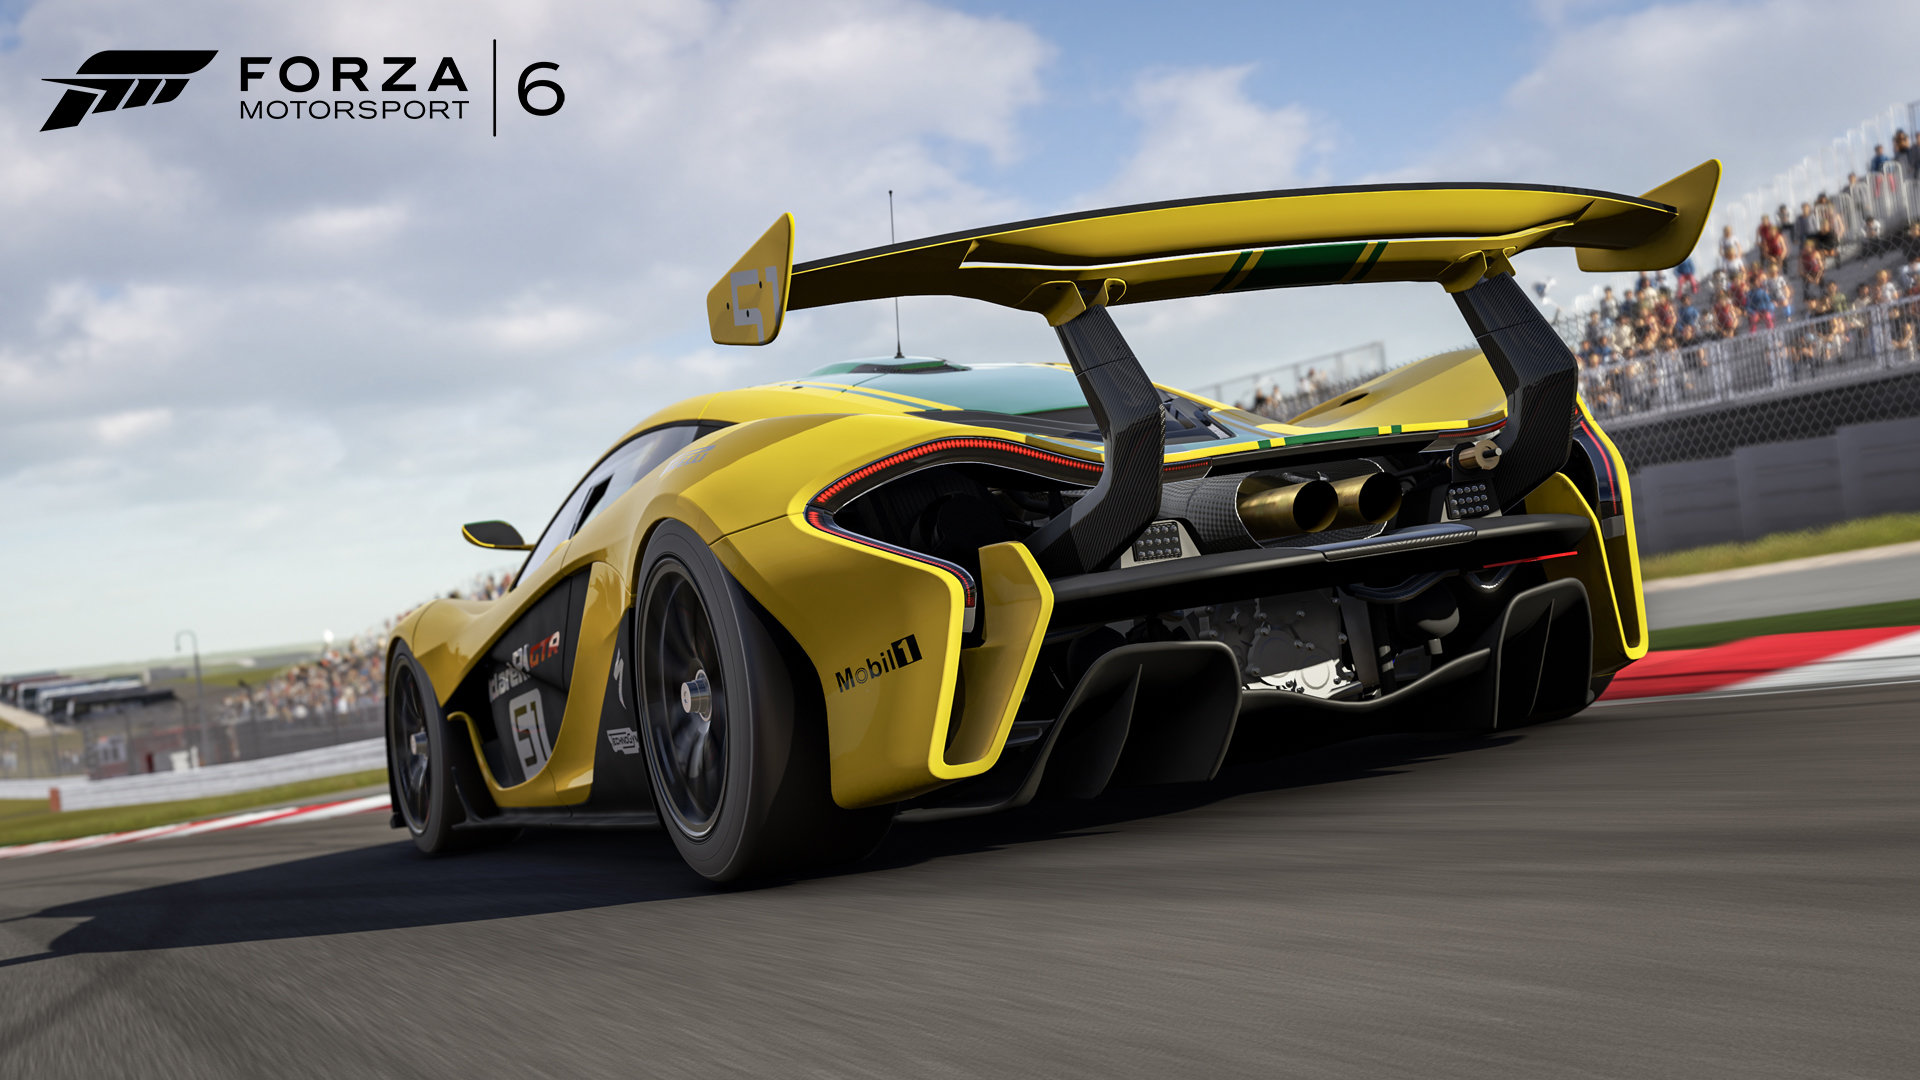 Best Forza Motorsport 6 wallpaper ID:131848 for High Resolution 1080p desktop